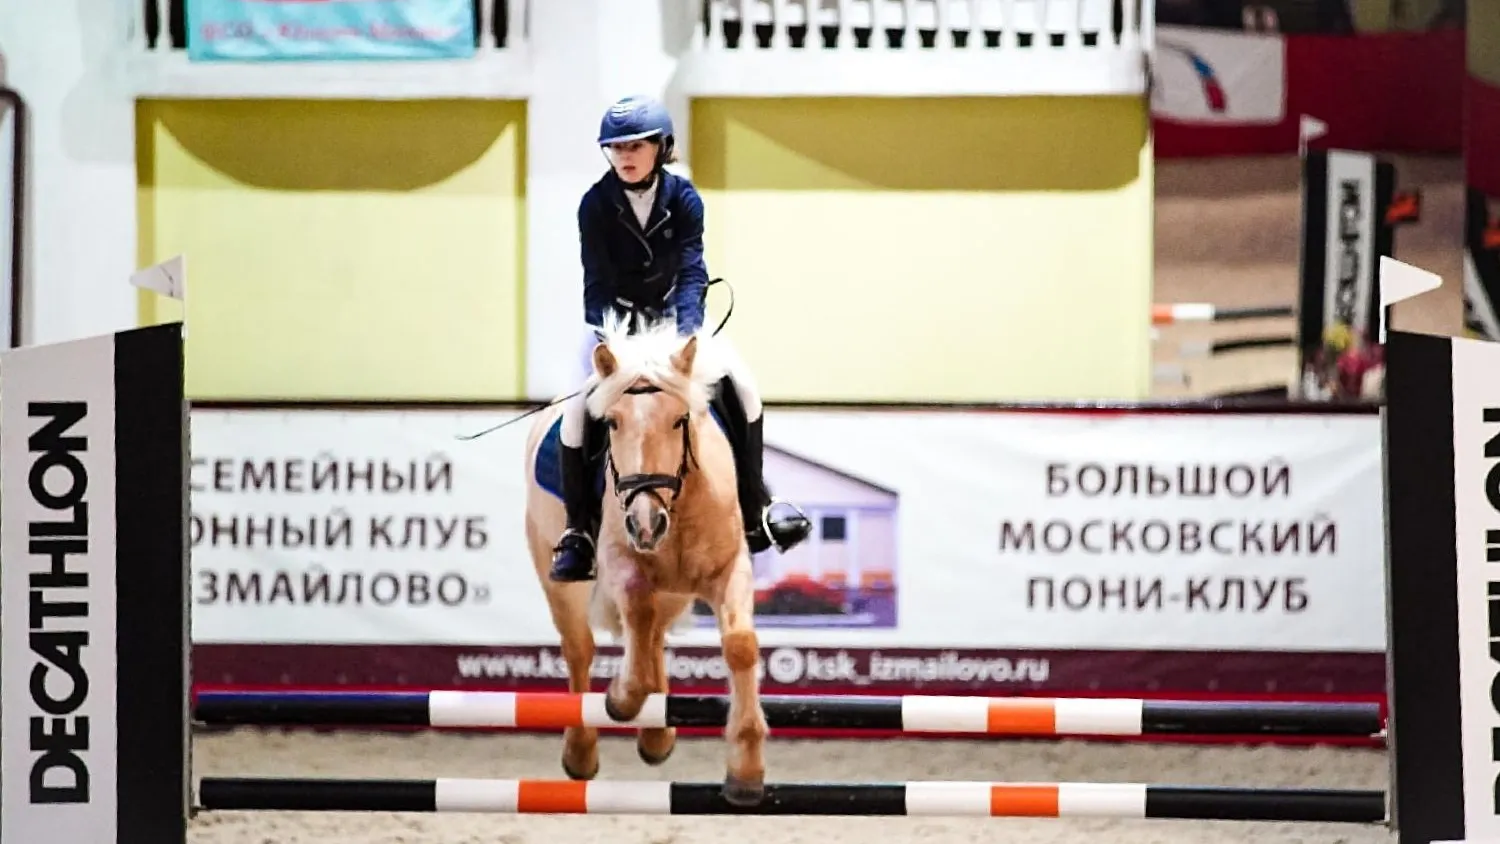 Фото: Федерация конного спорта ЯНАО, «ВКонтакте»